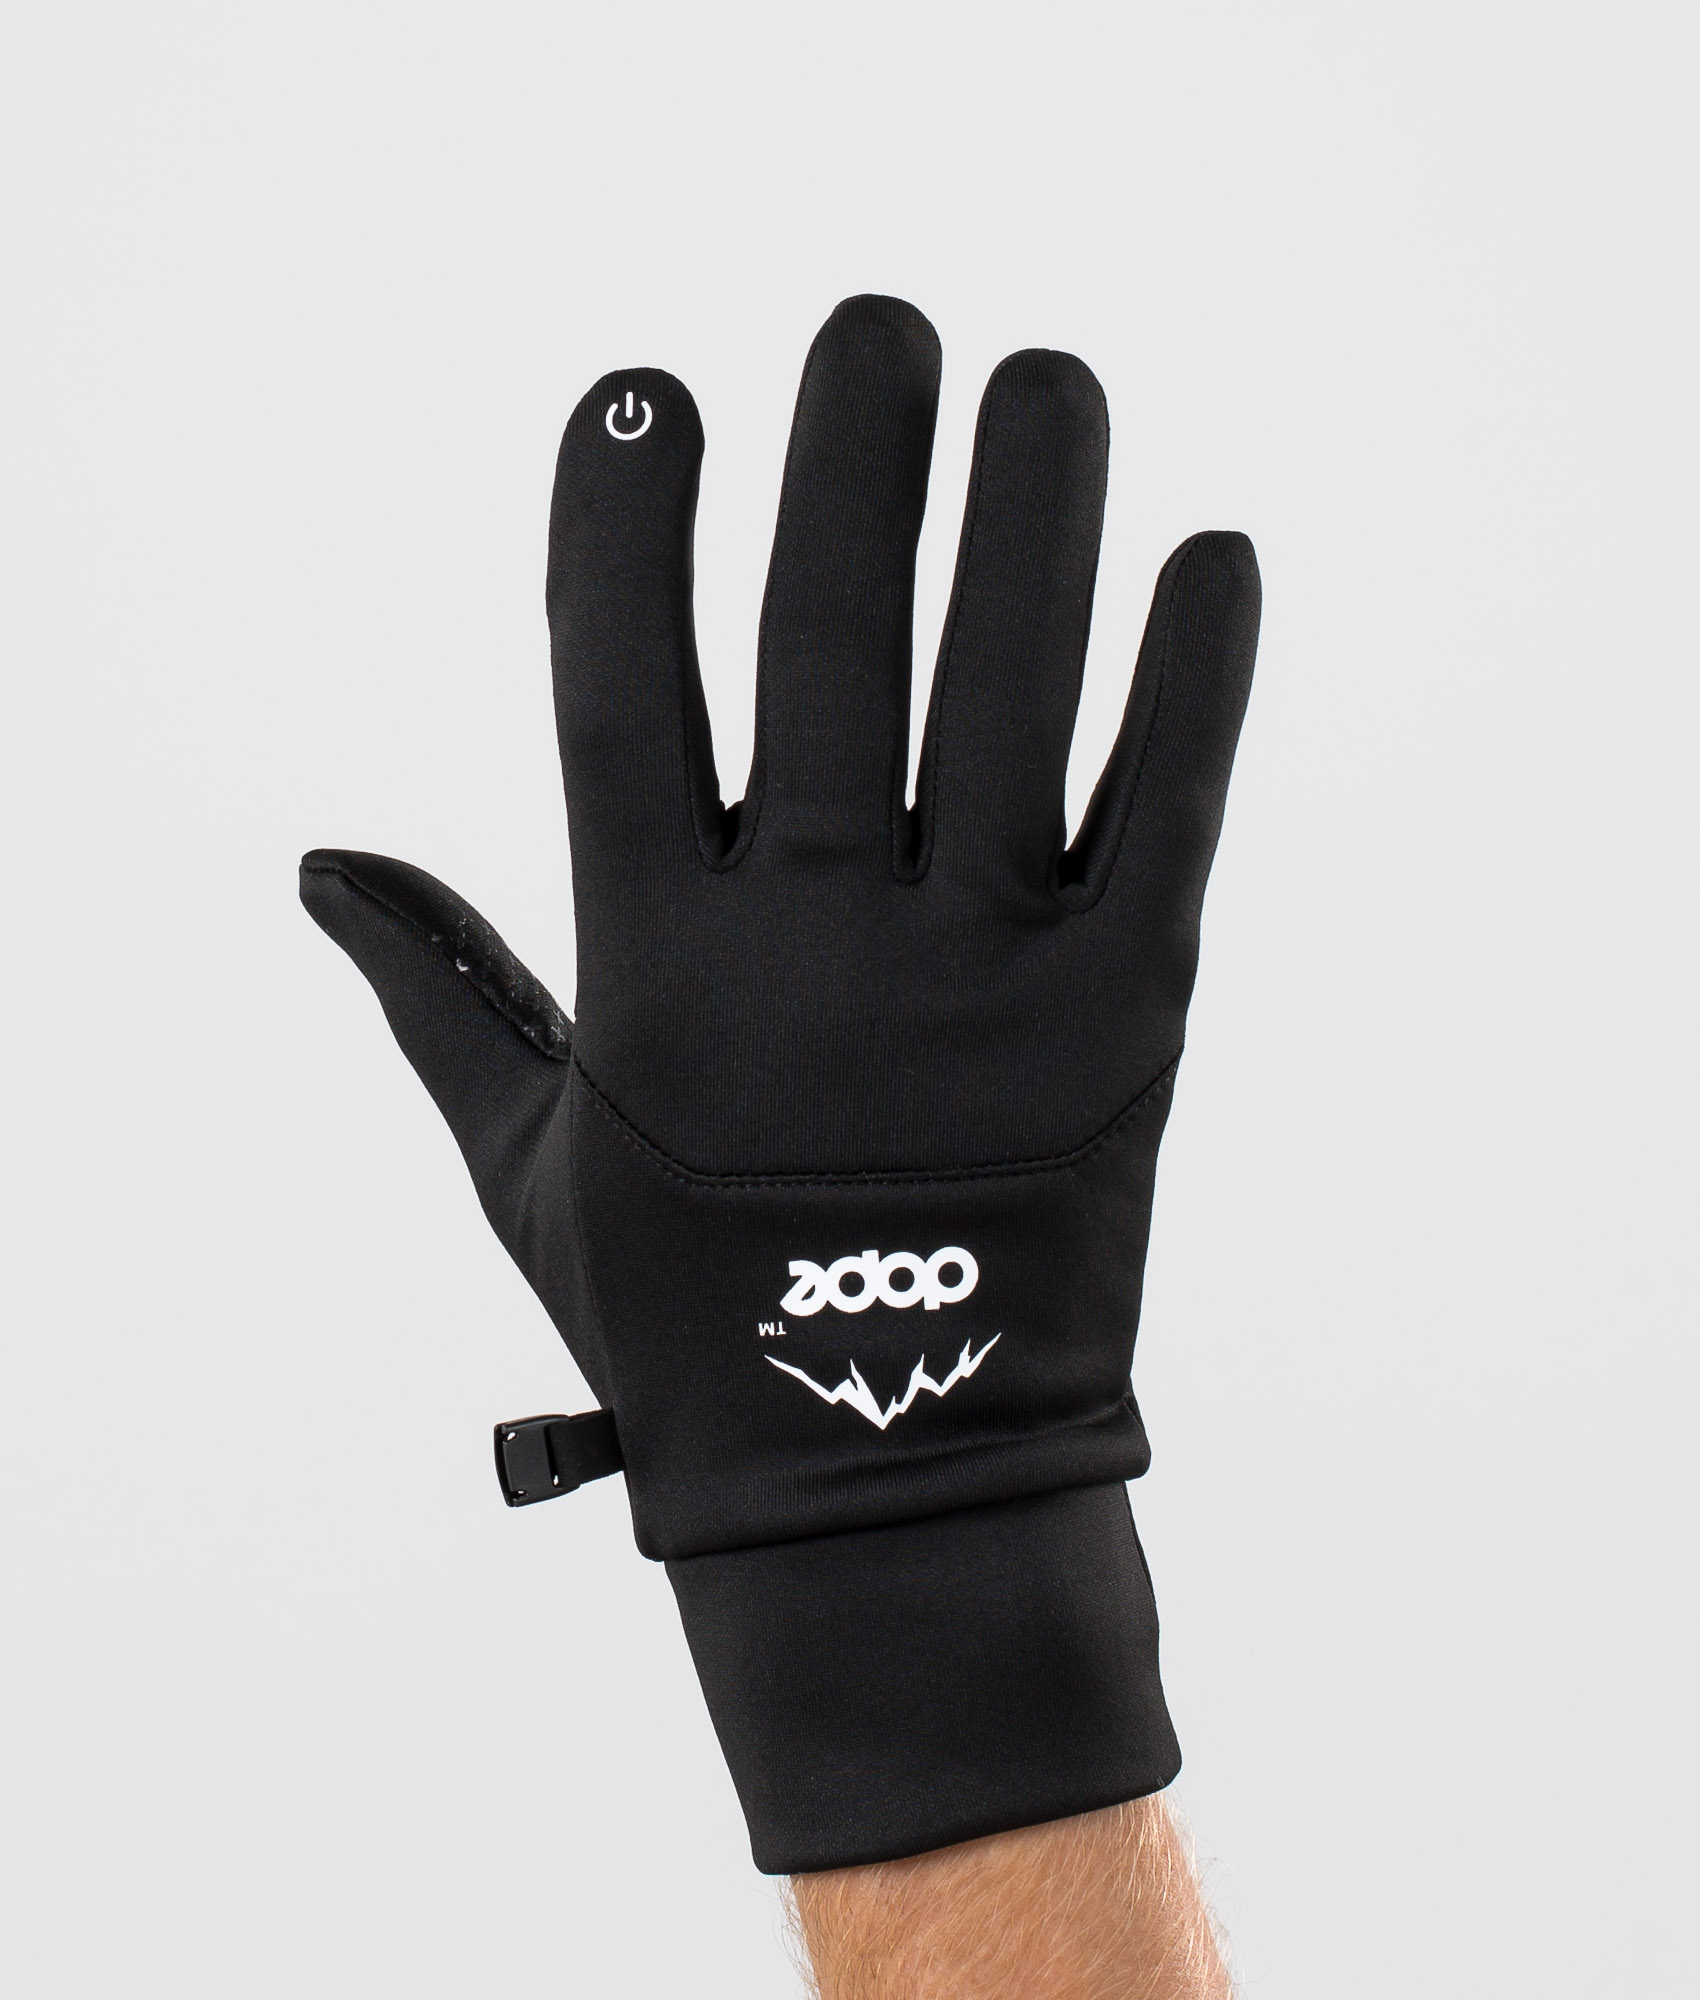 Men's snowboard Gloves & Mittens | Dopesnow.com